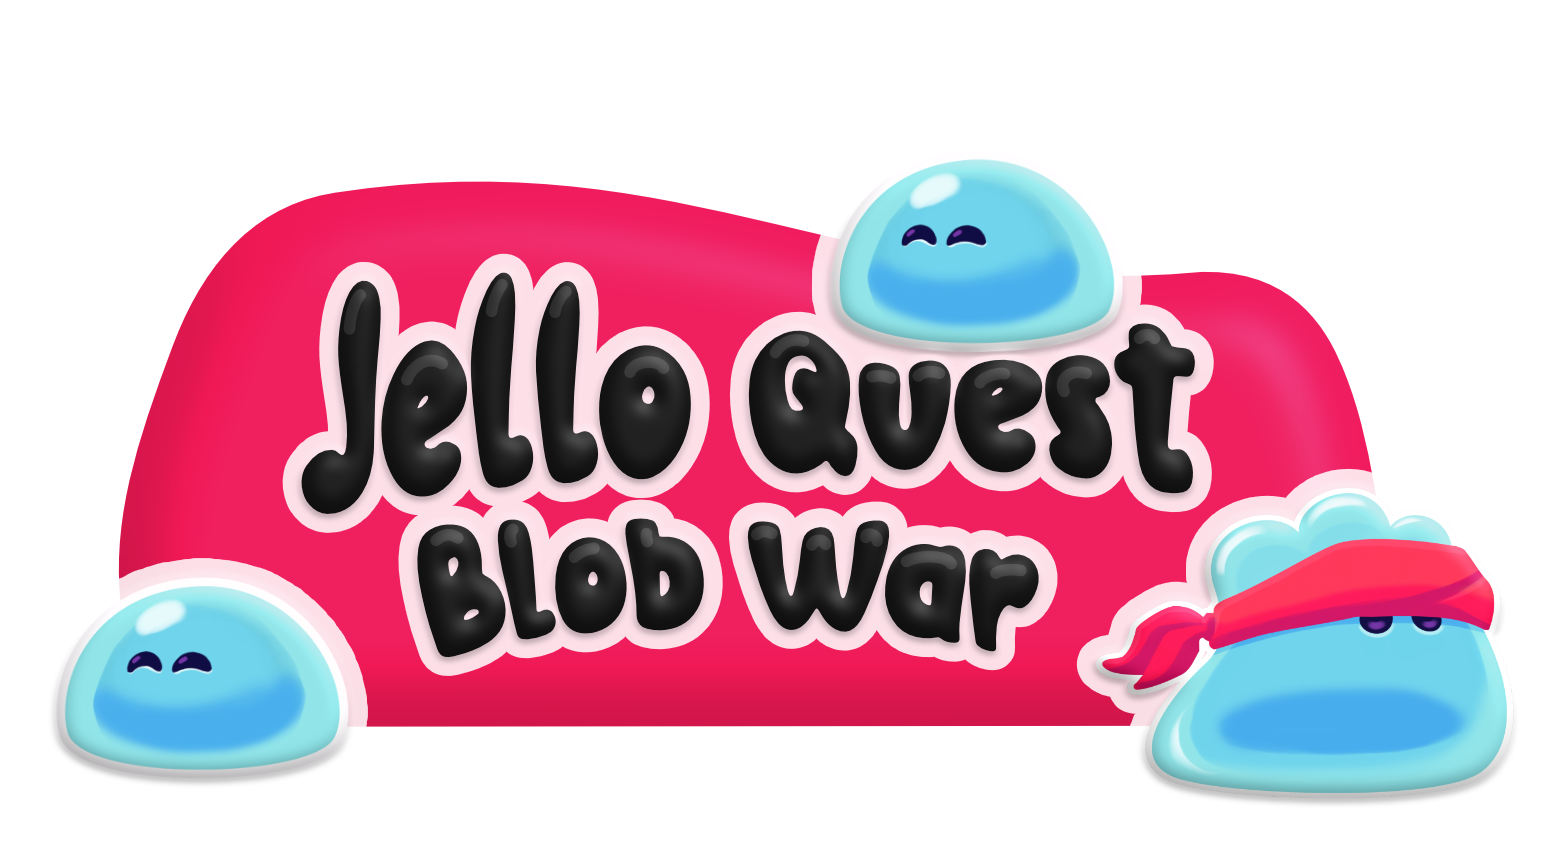 Jello Quest: Blob War